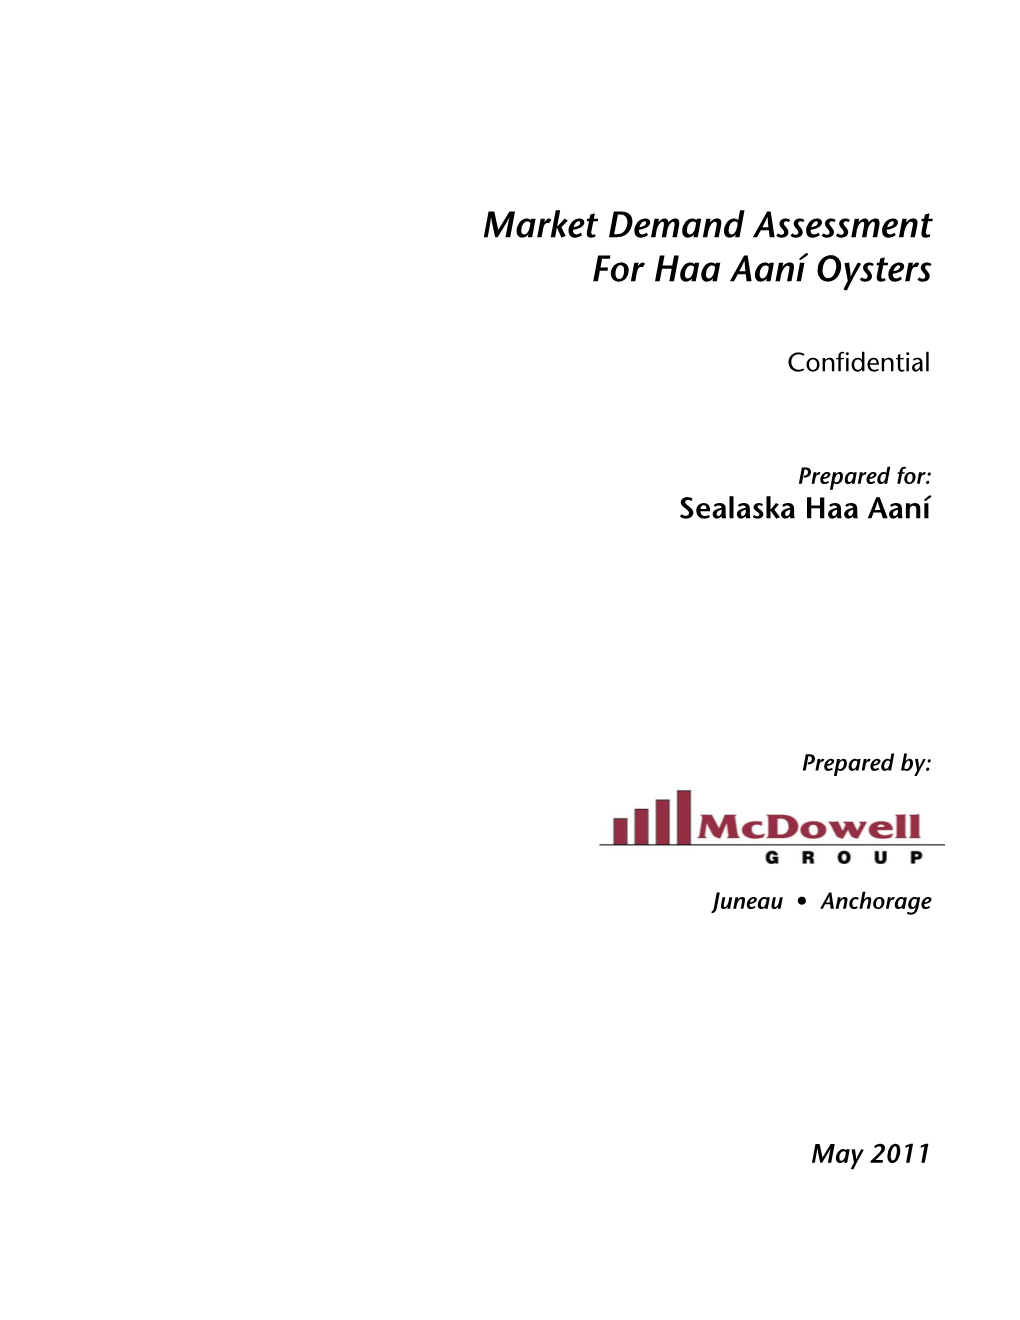 Market Demand Assessment for Haa Aaní Oysters